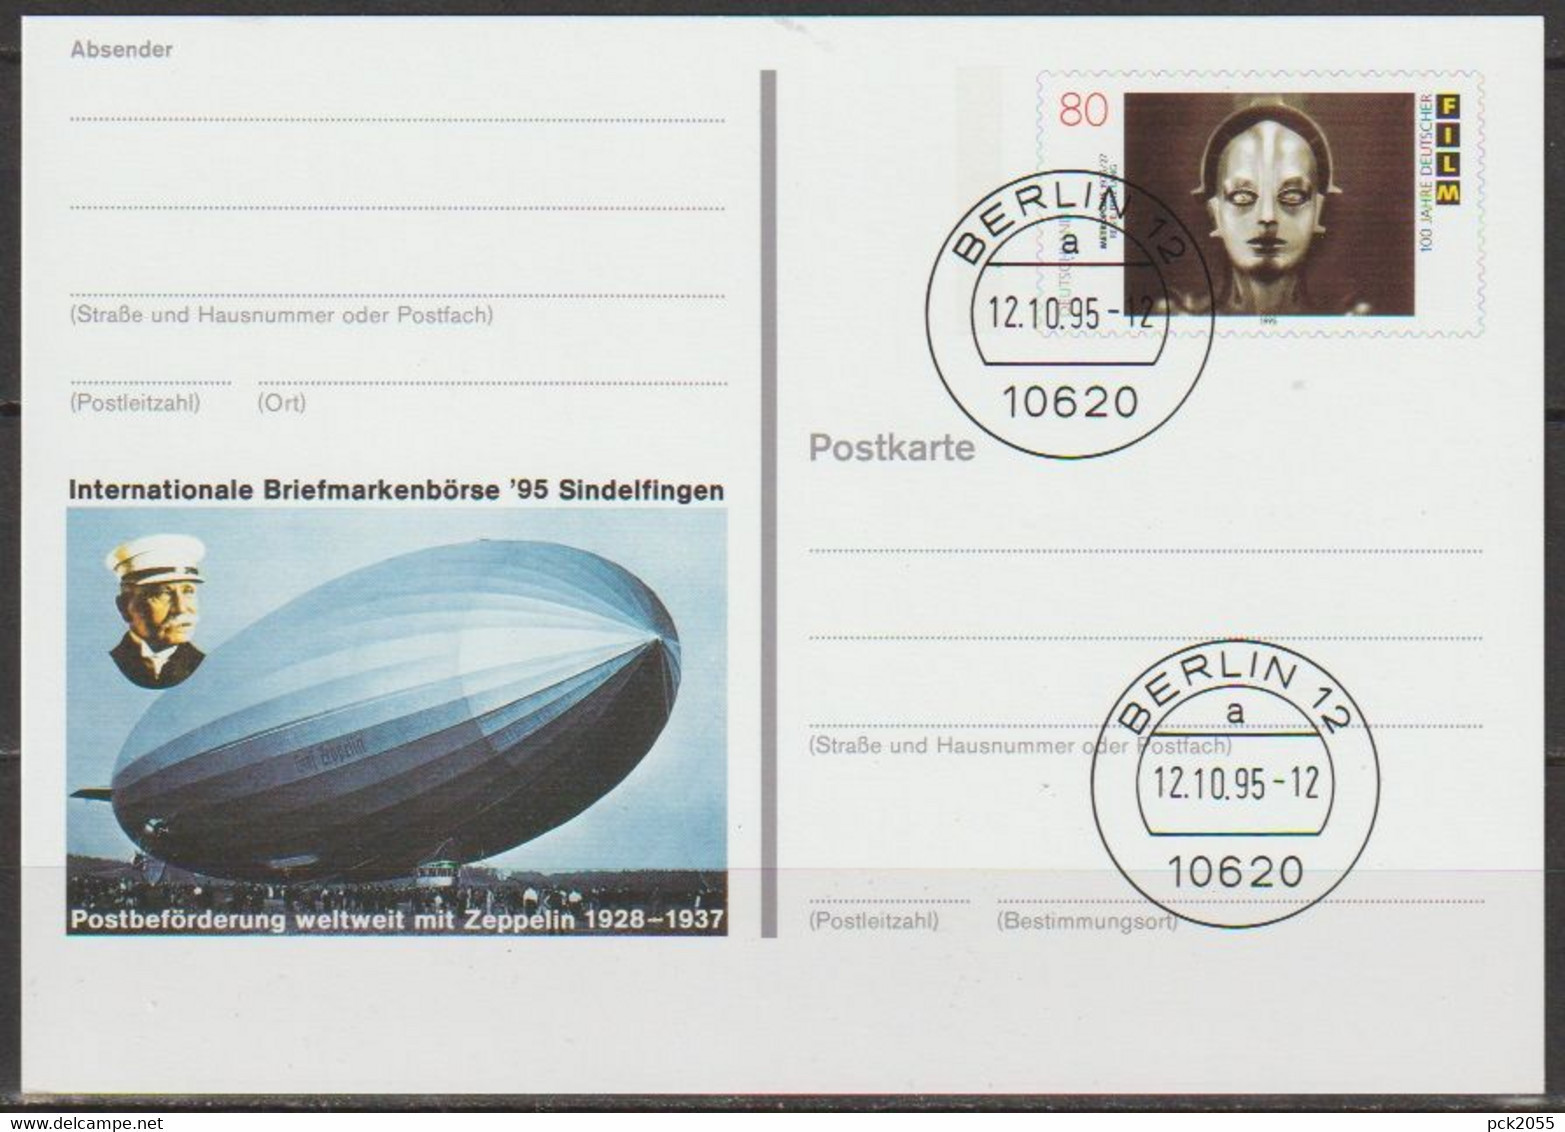 BRD Ganzsache 1995 PSo40 Briefmarkenbörse Sindelfingen Ersttagsstempel 12.10.95 Berlin  (d372)günstige Versandkosten - Cartes Postales - Oblitérées